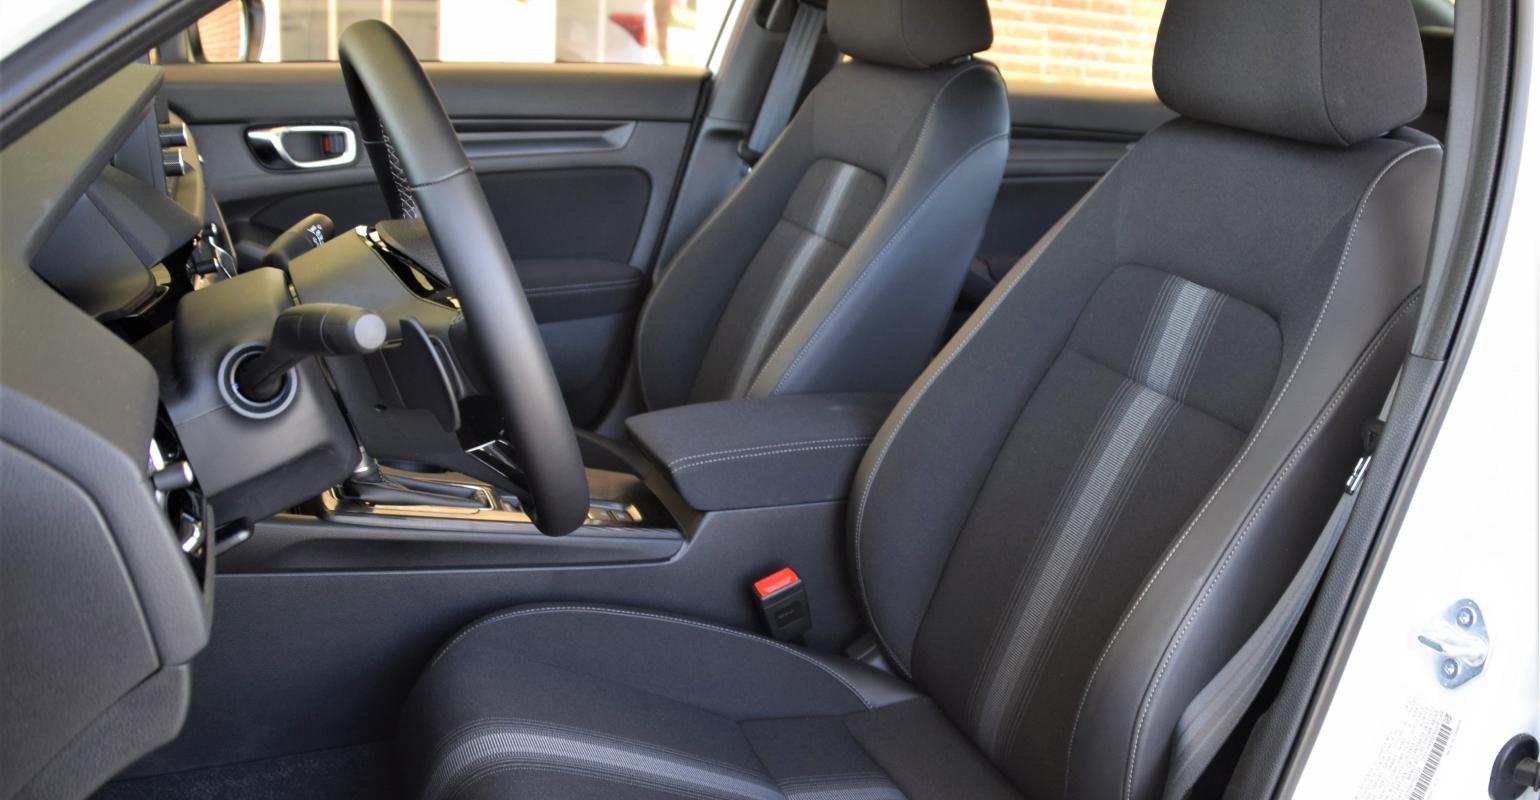 Honda Civic (USA) Interior Layout & Technology | Top Gear